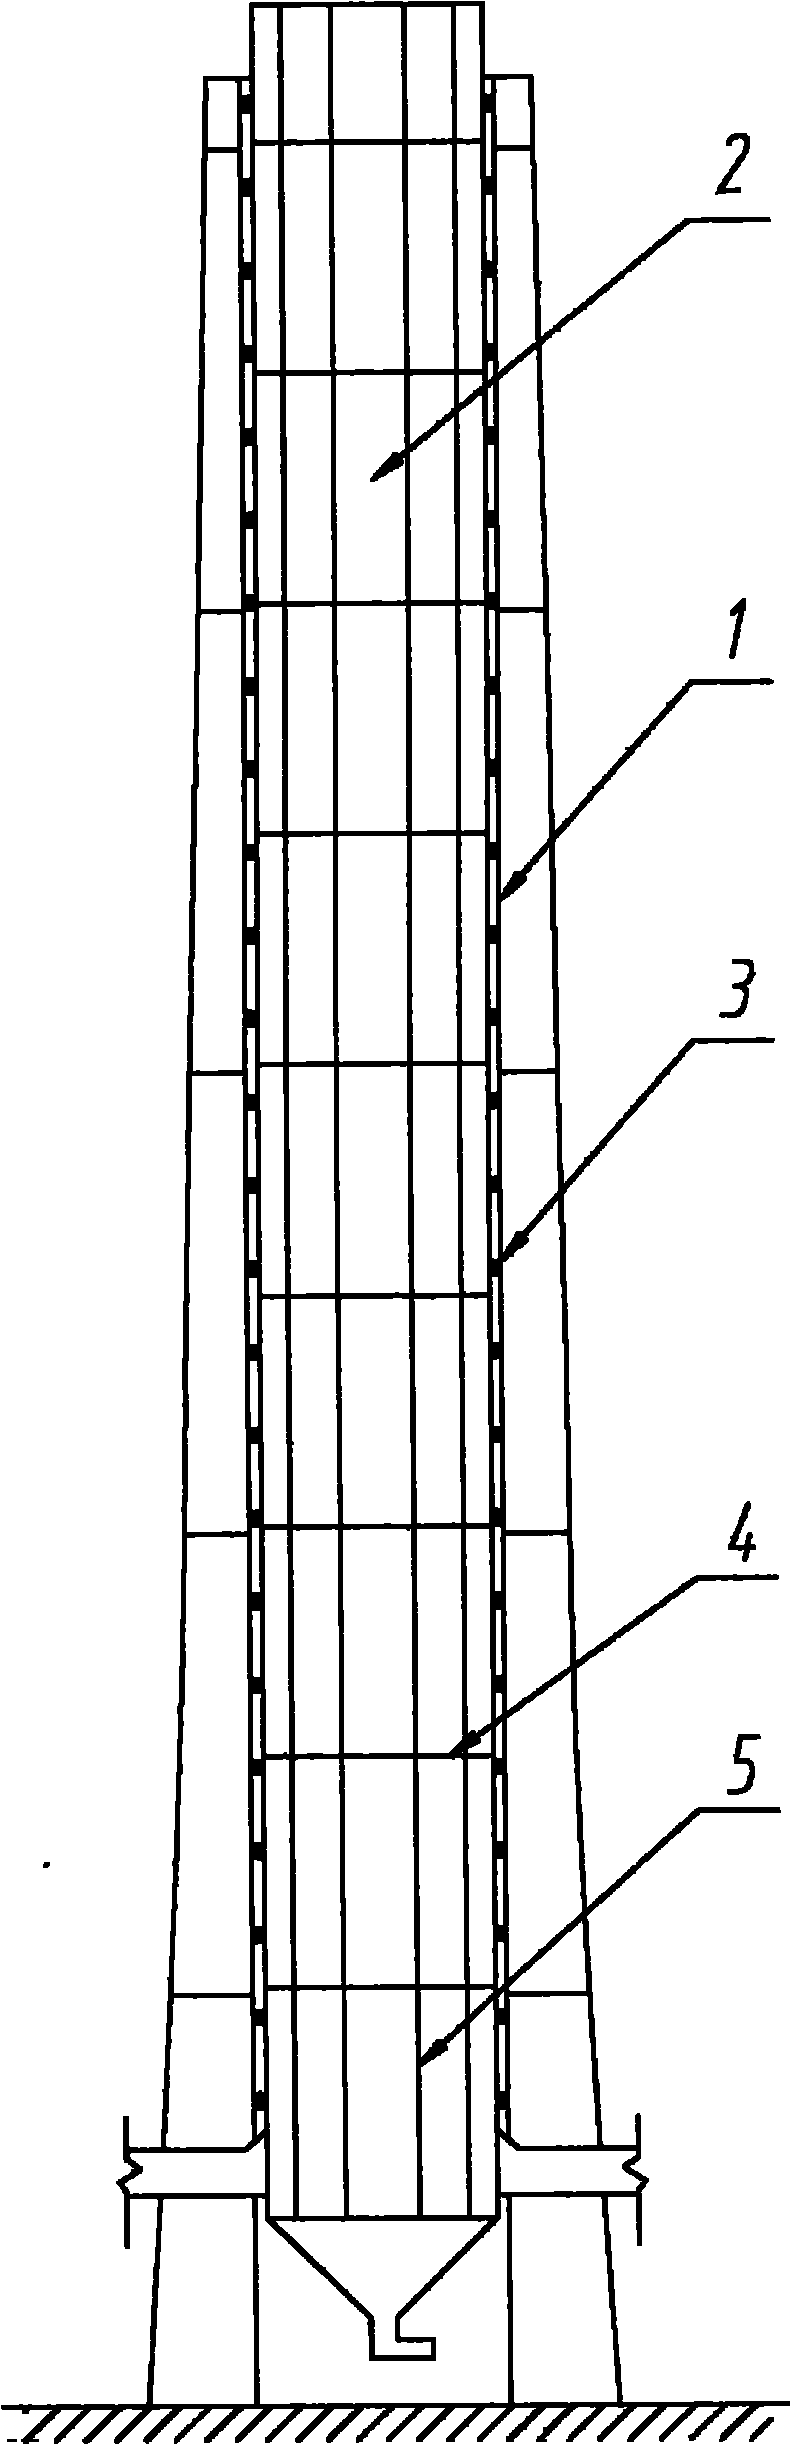 Anticorrosion method of chimney used for discharging wet-method desulfurized fume